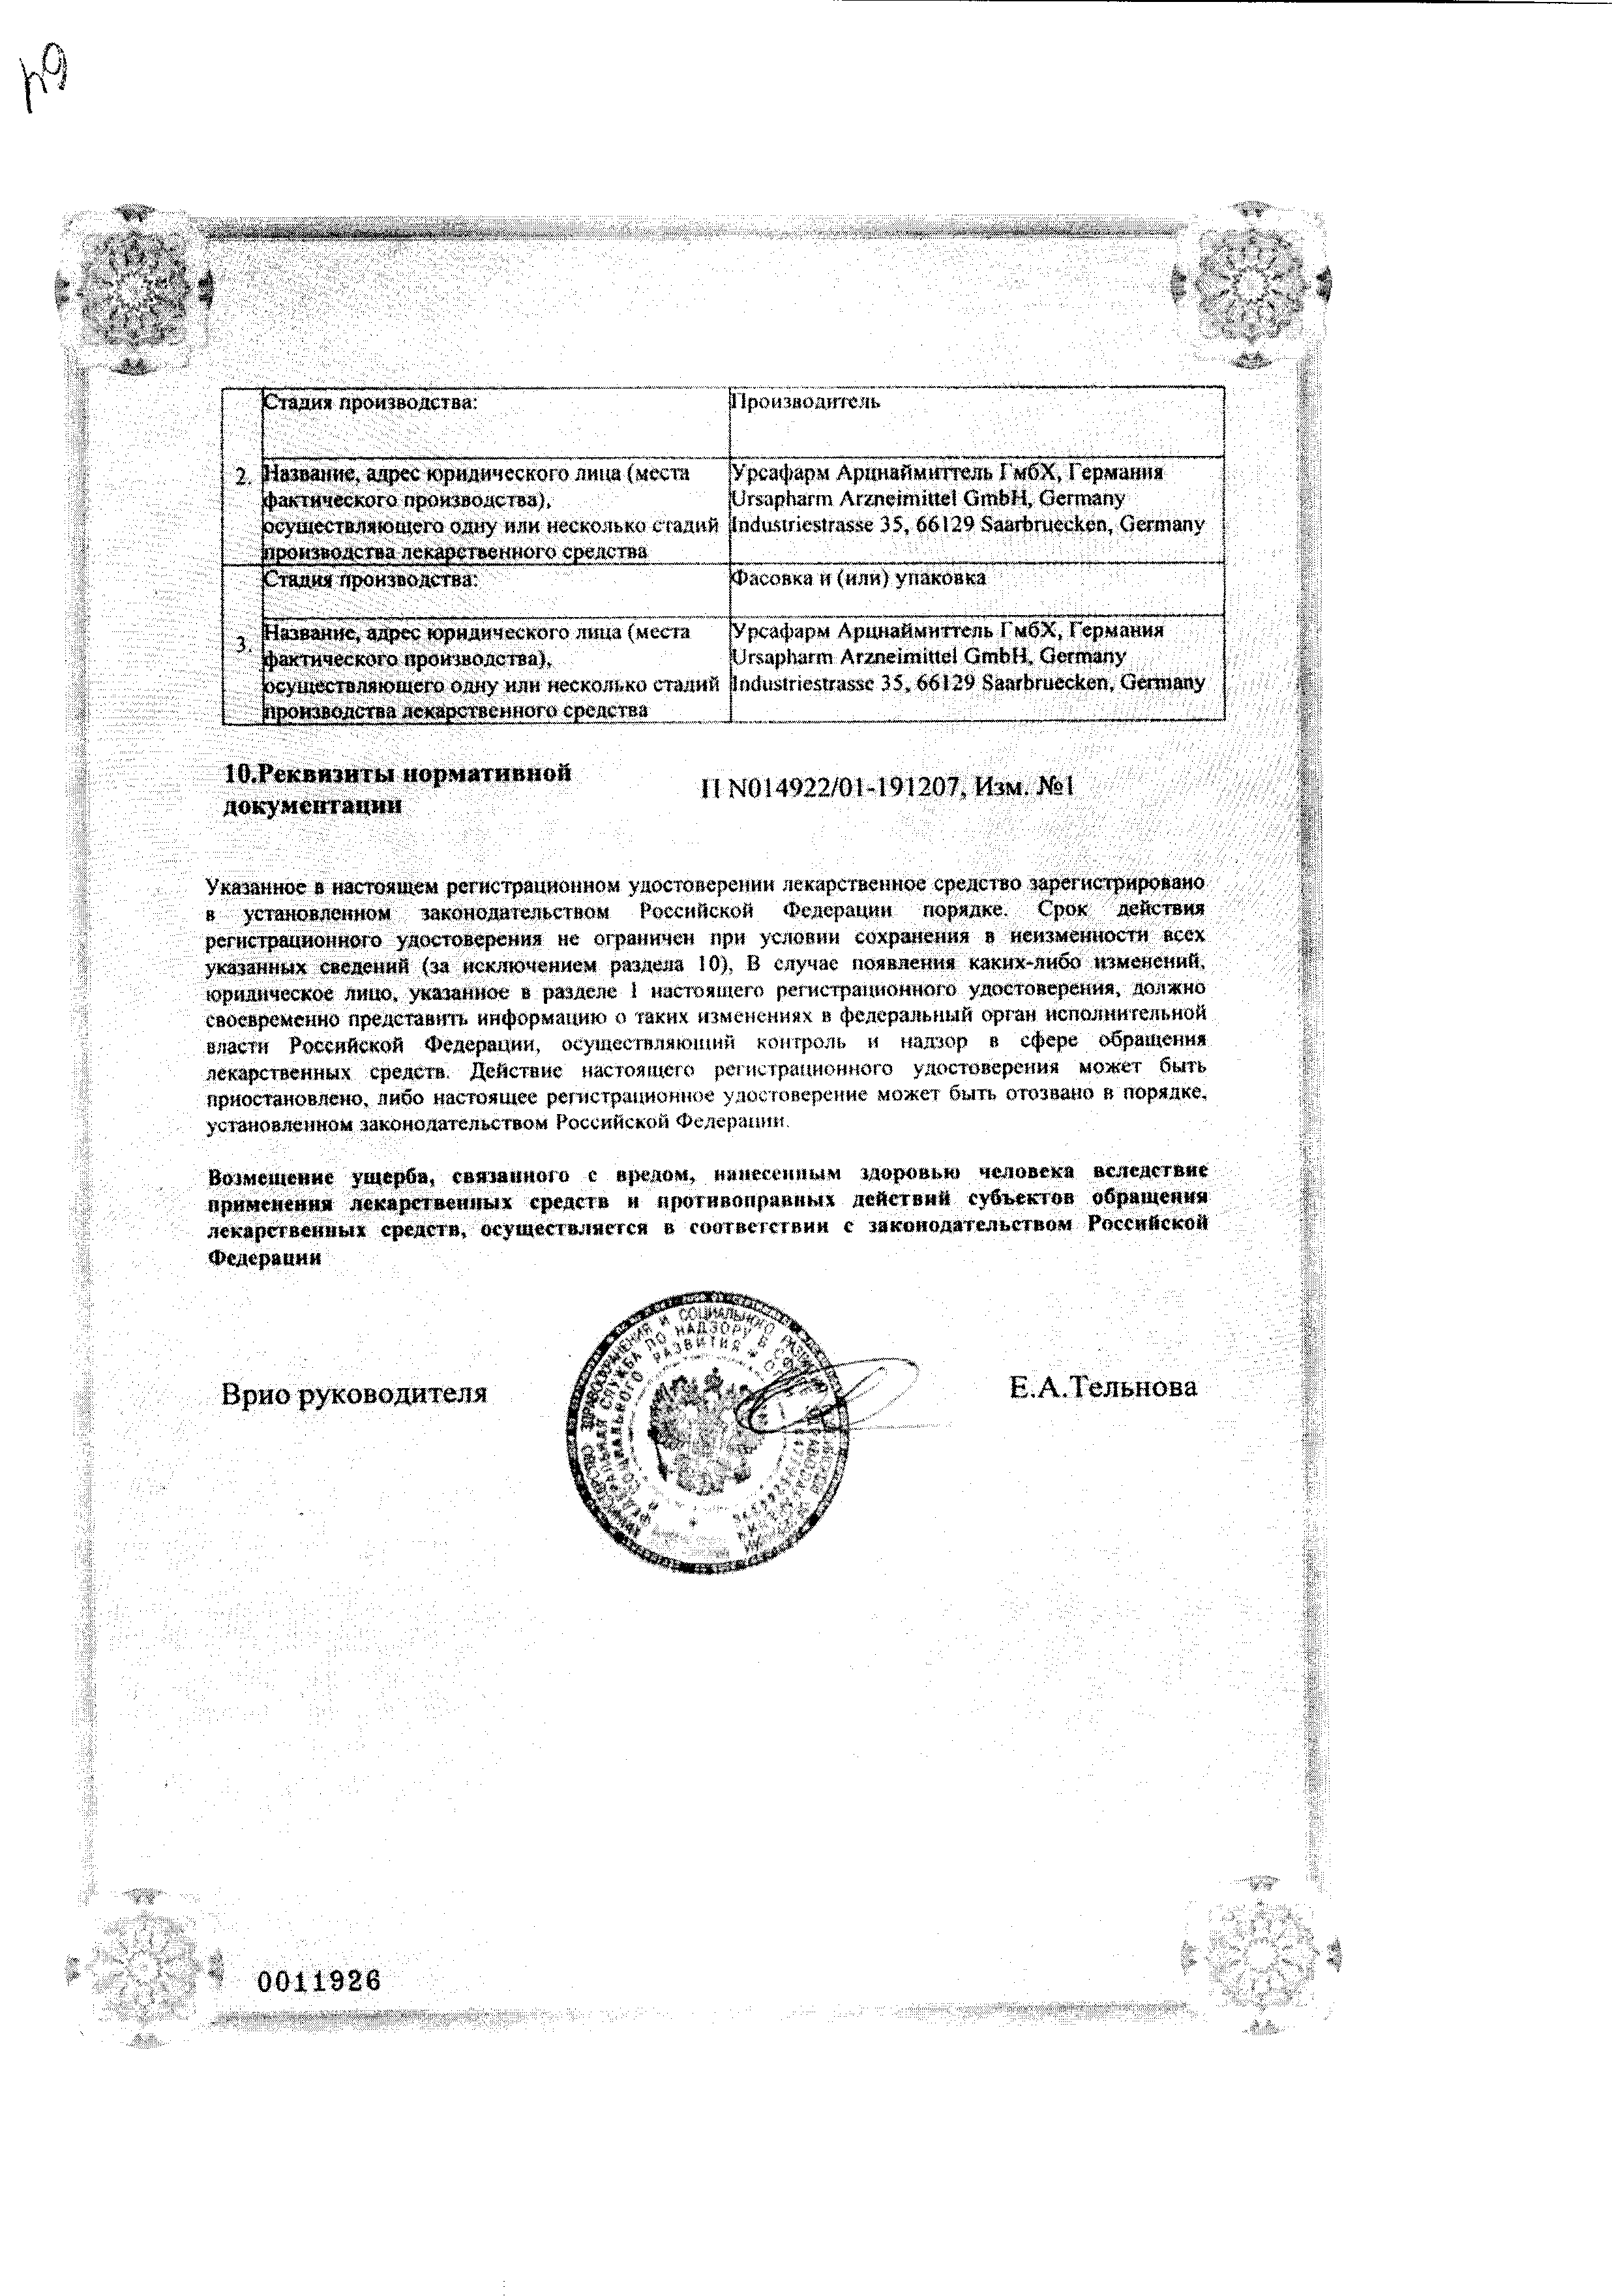 Гидрокортизон-ПОС сертификат